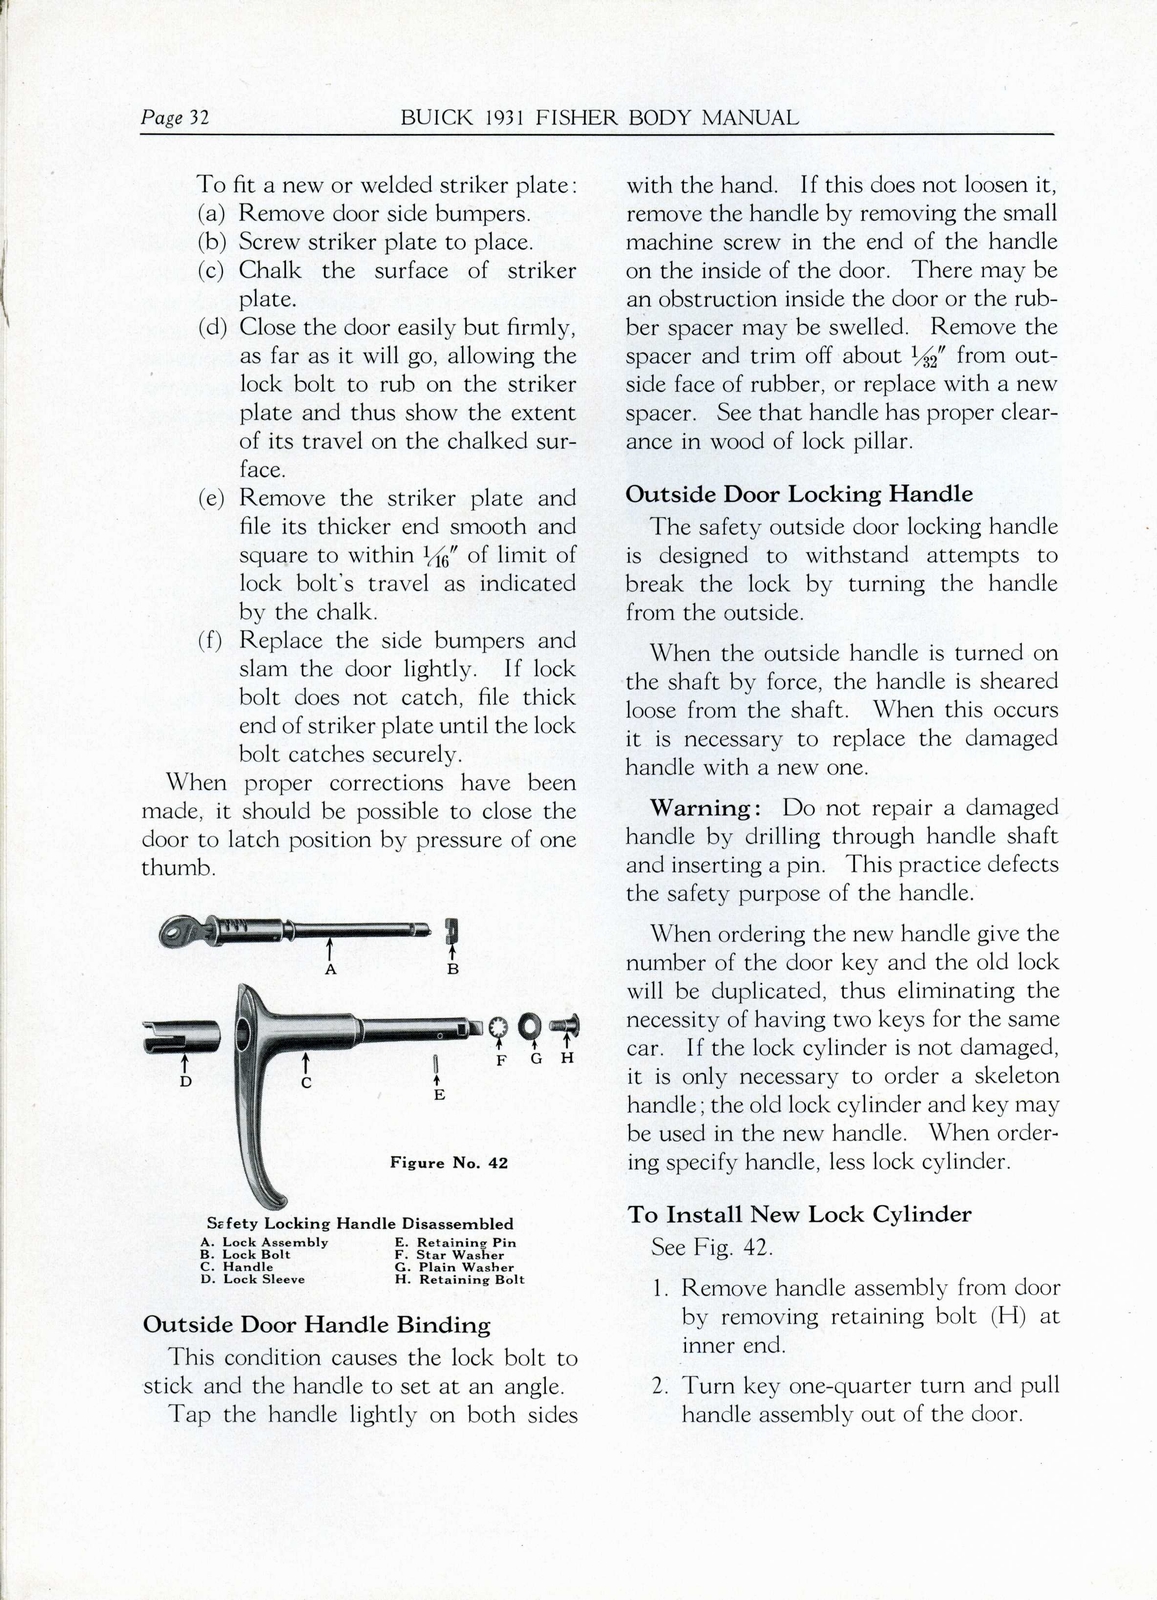 n_1931 Buick Fisher Body Manual-32.jpg